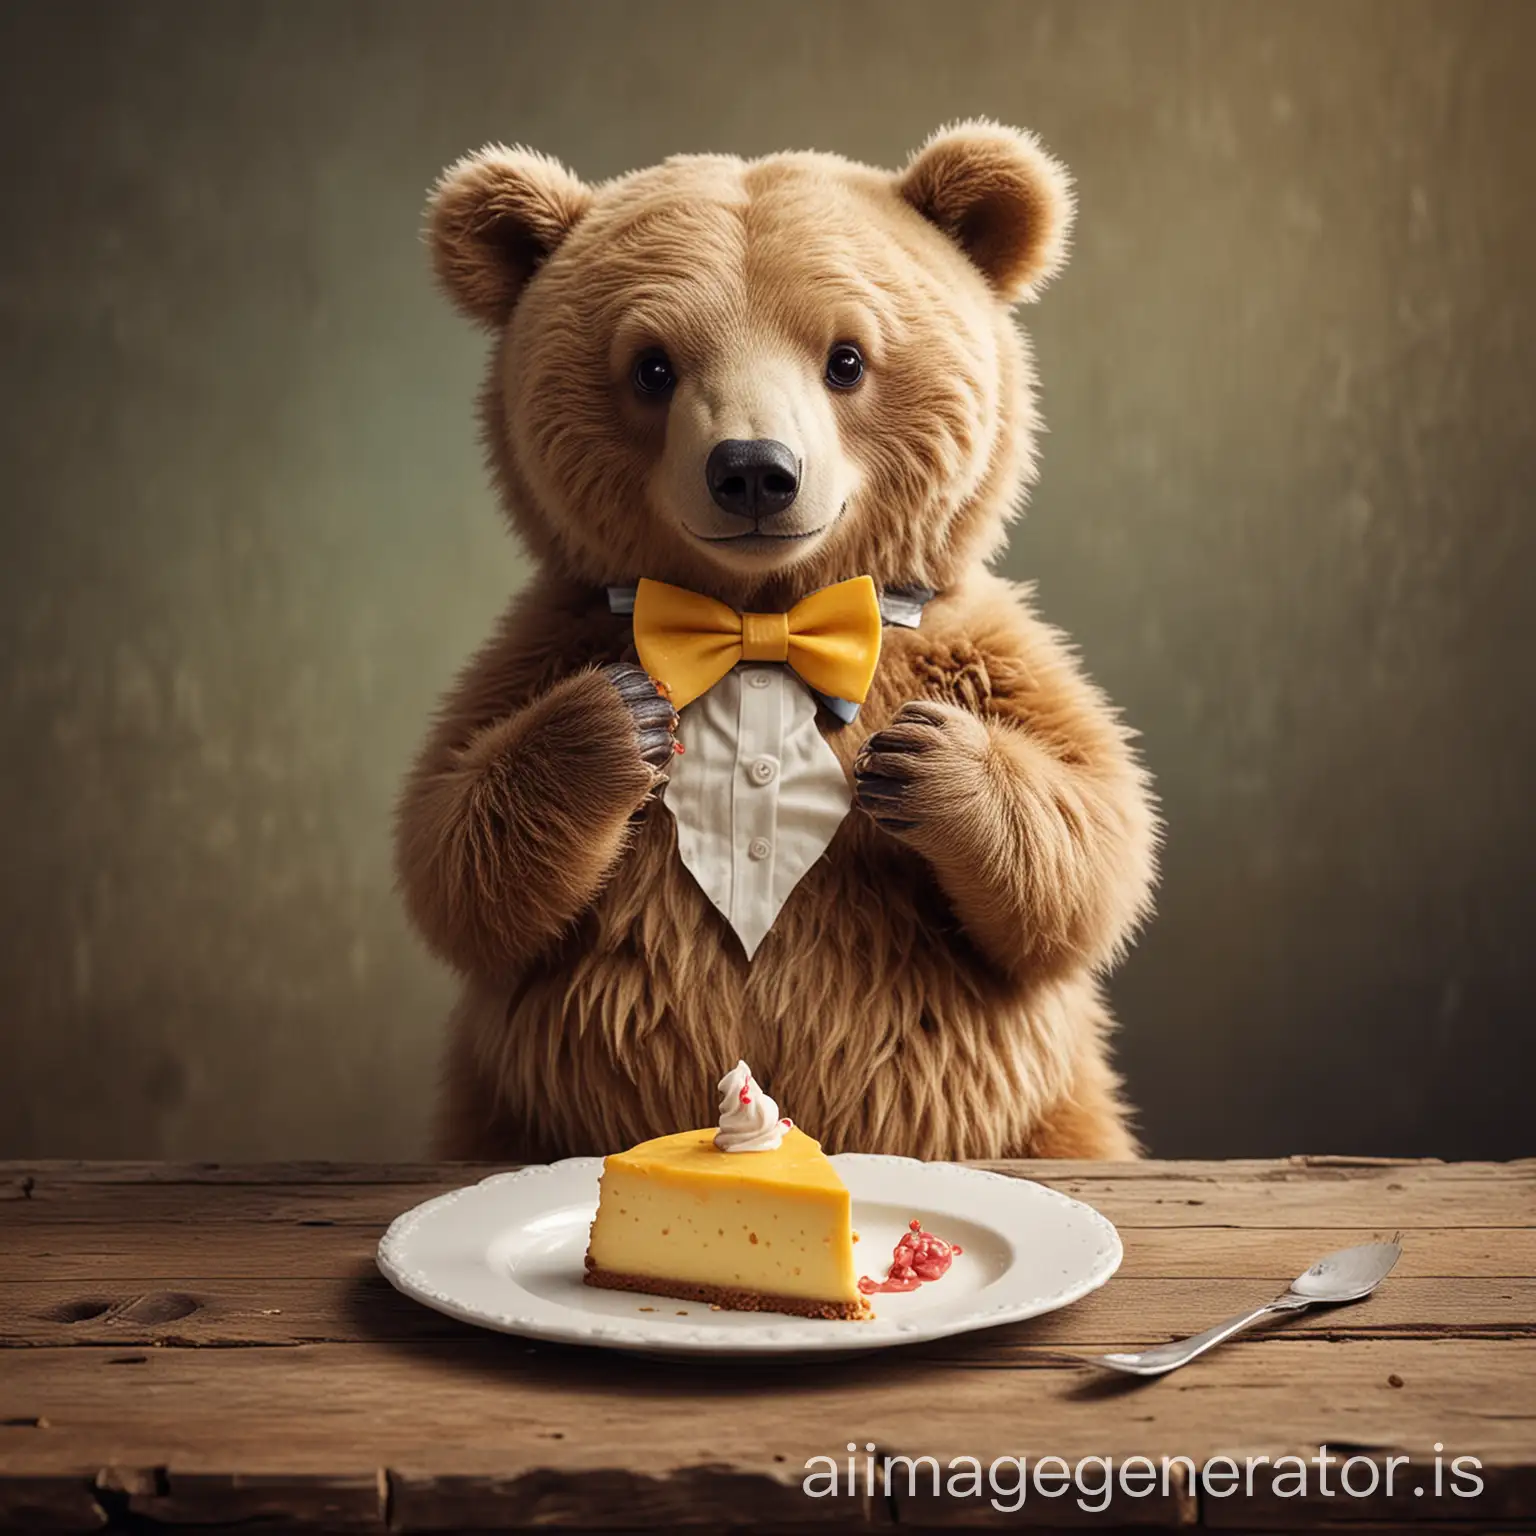 Adorable-Bear-in-Bow-Tie-Enjoying-a-Cheesecake-Delight